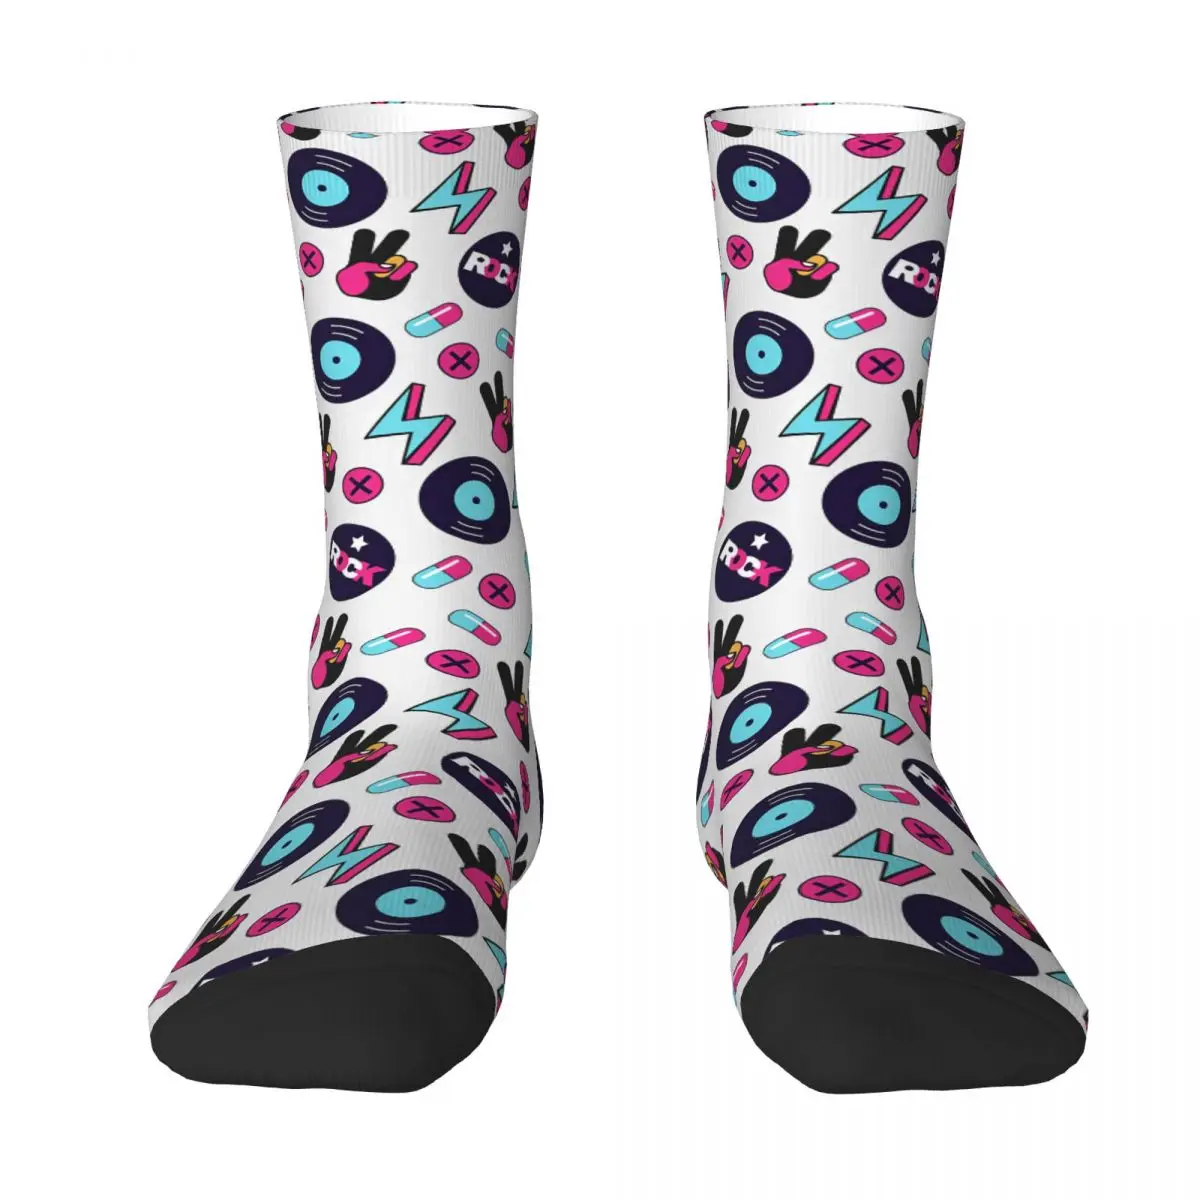 Hippie Seamless Rock Pattern With Vinyl Adult Socks,Unisex socks,men Socks women Socks